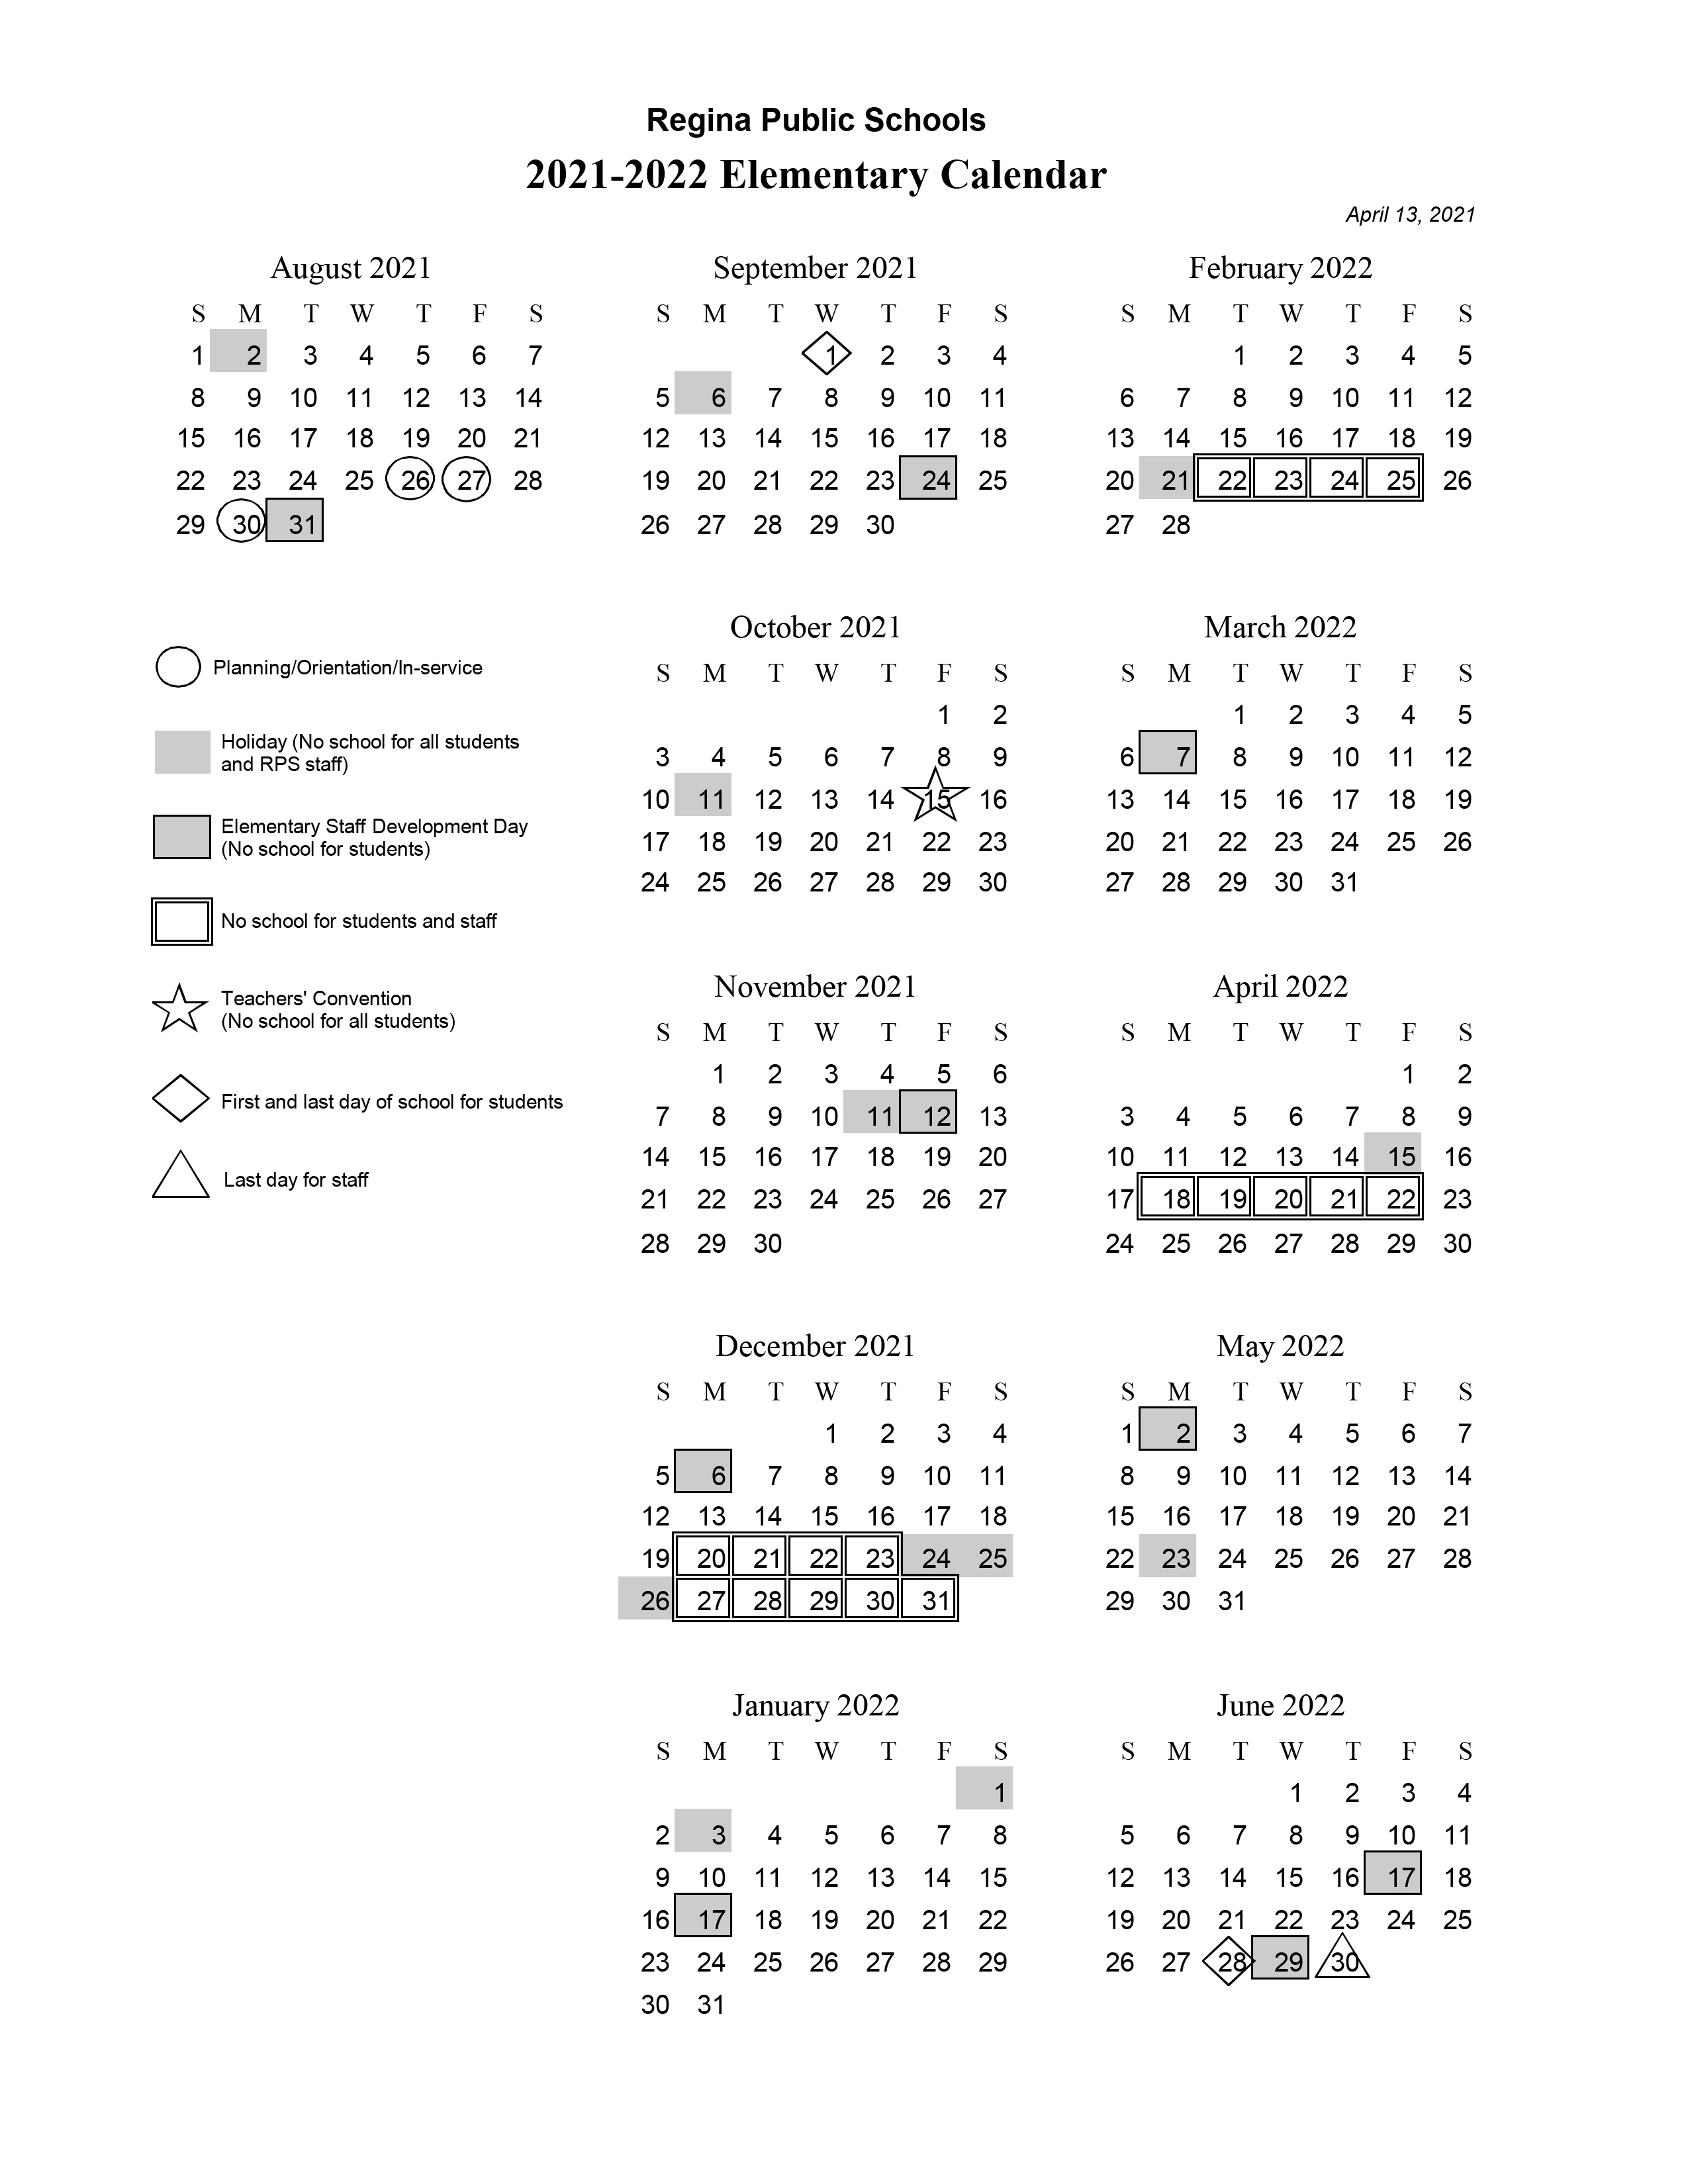 Regina Public School Calendar 2025